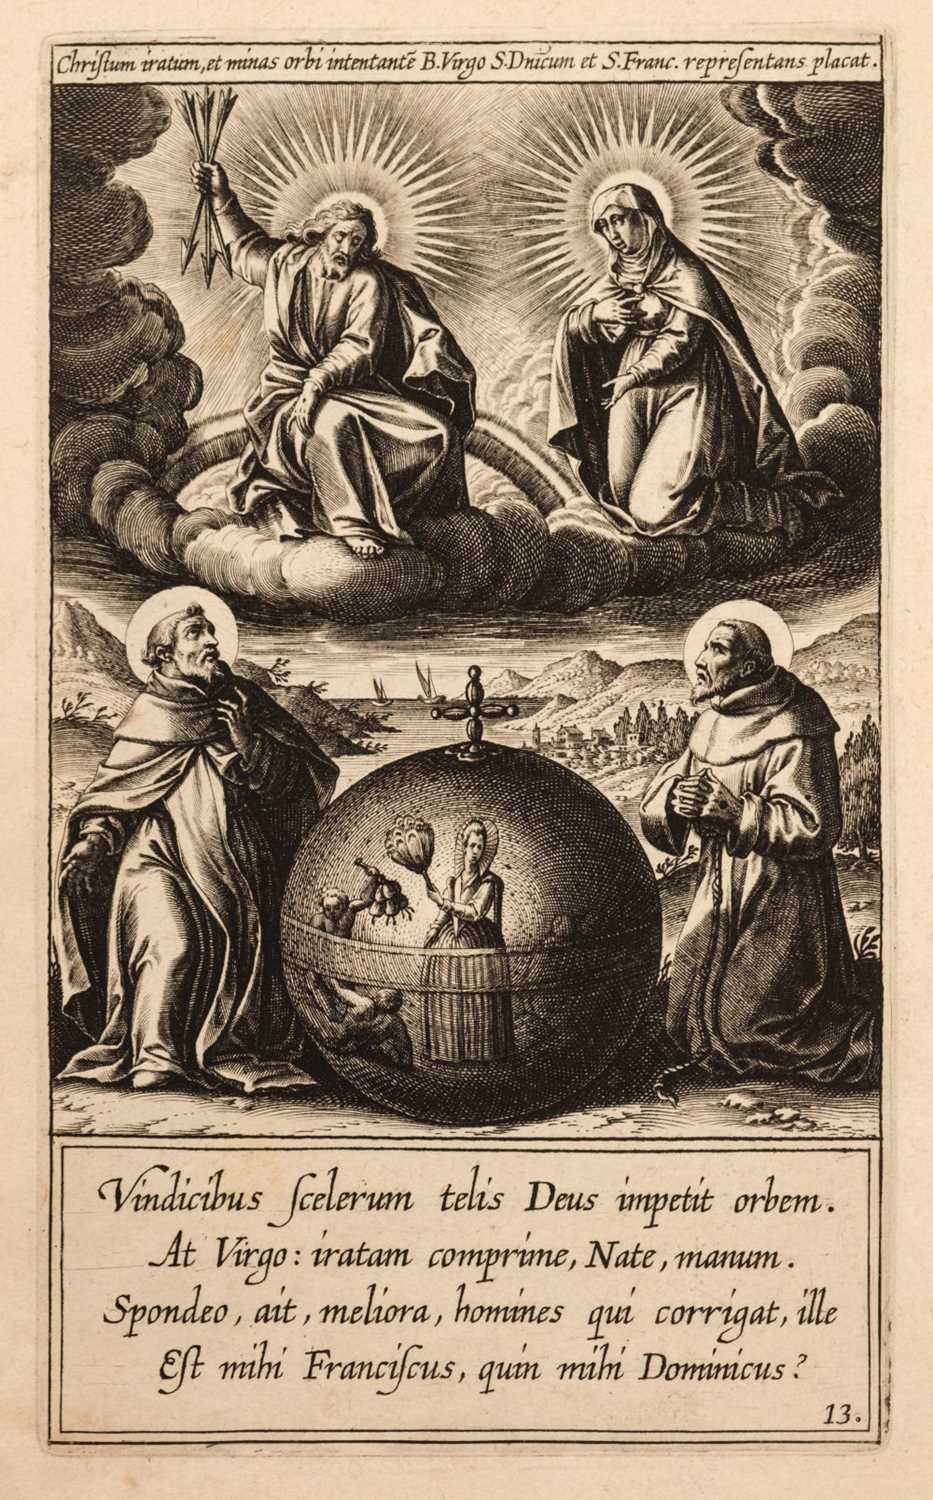 Lot 265 - 1611. Galle (Theodor). Vita et miracula S.P. Dominici, 1611